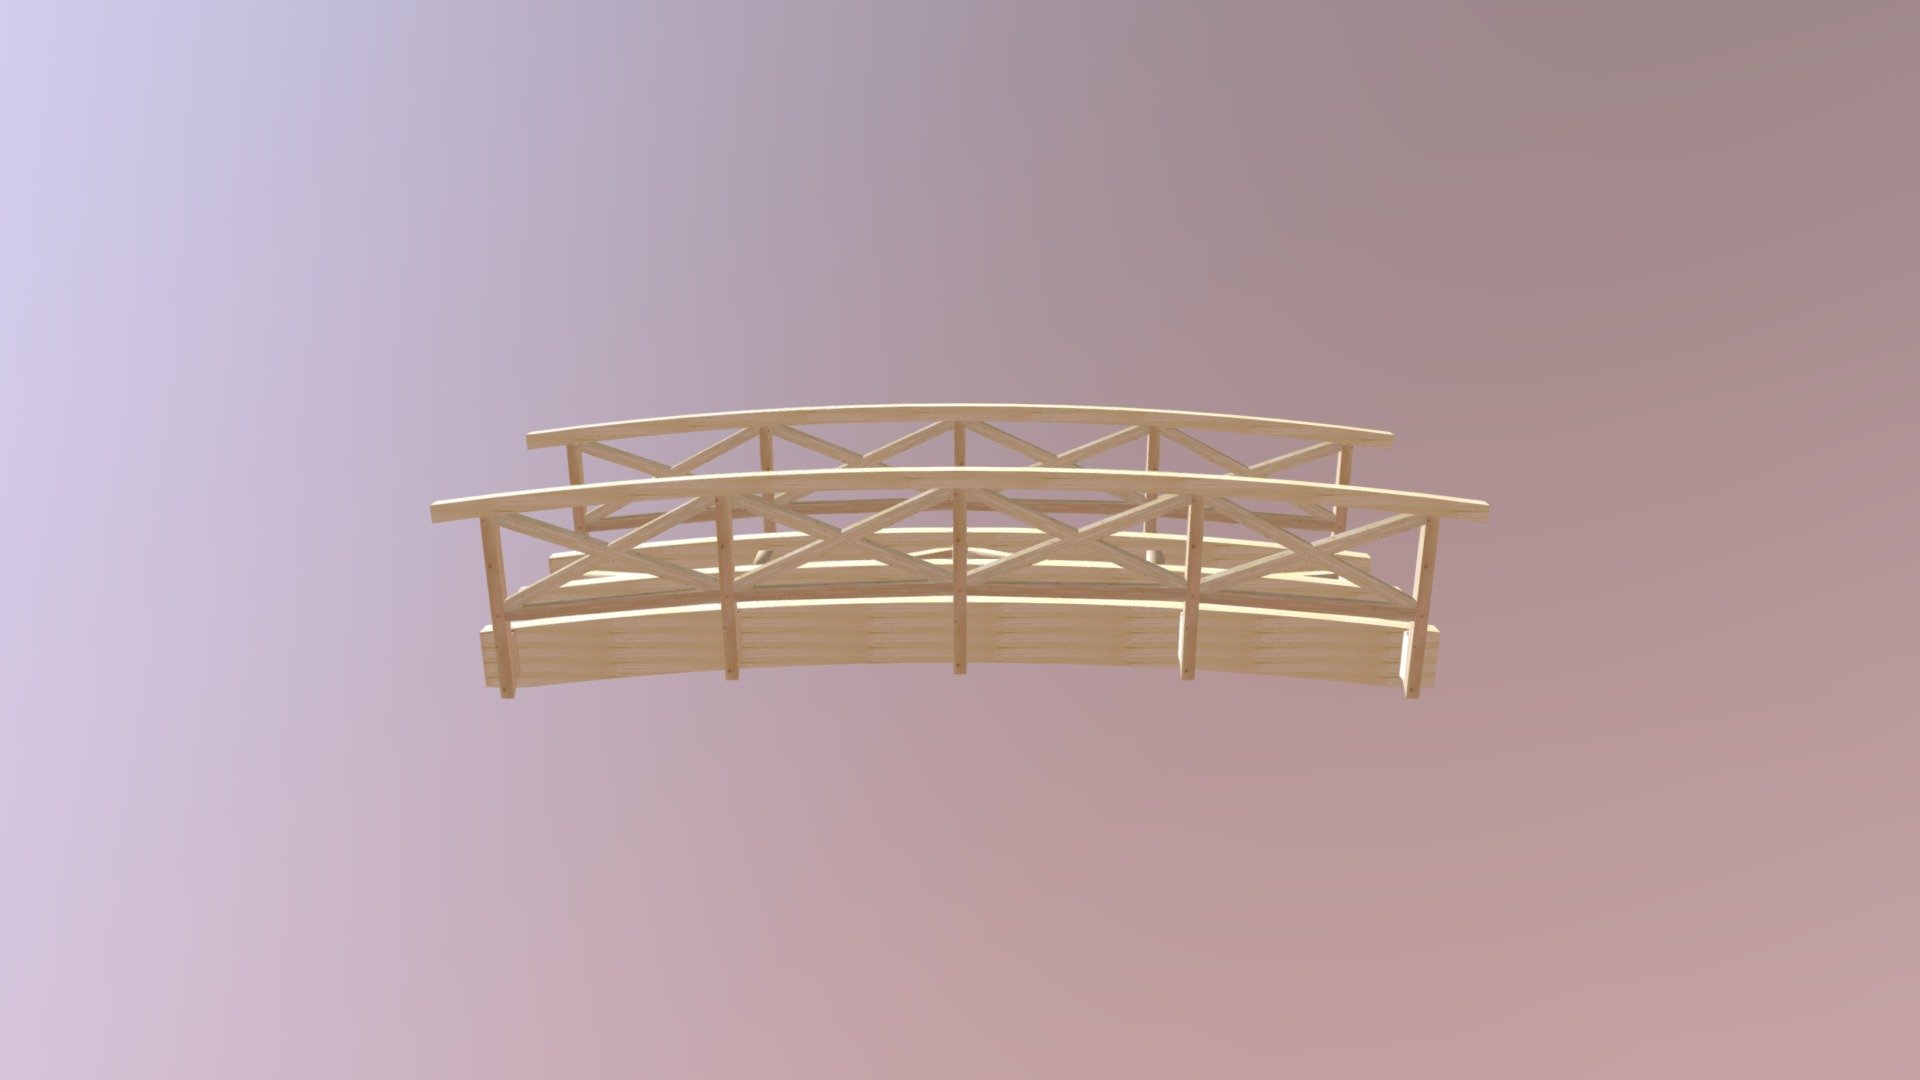 Pěší lávka, Bridge, Footbridge - Lávka - 3D model by JE (@eder.jaroslav) 3d model